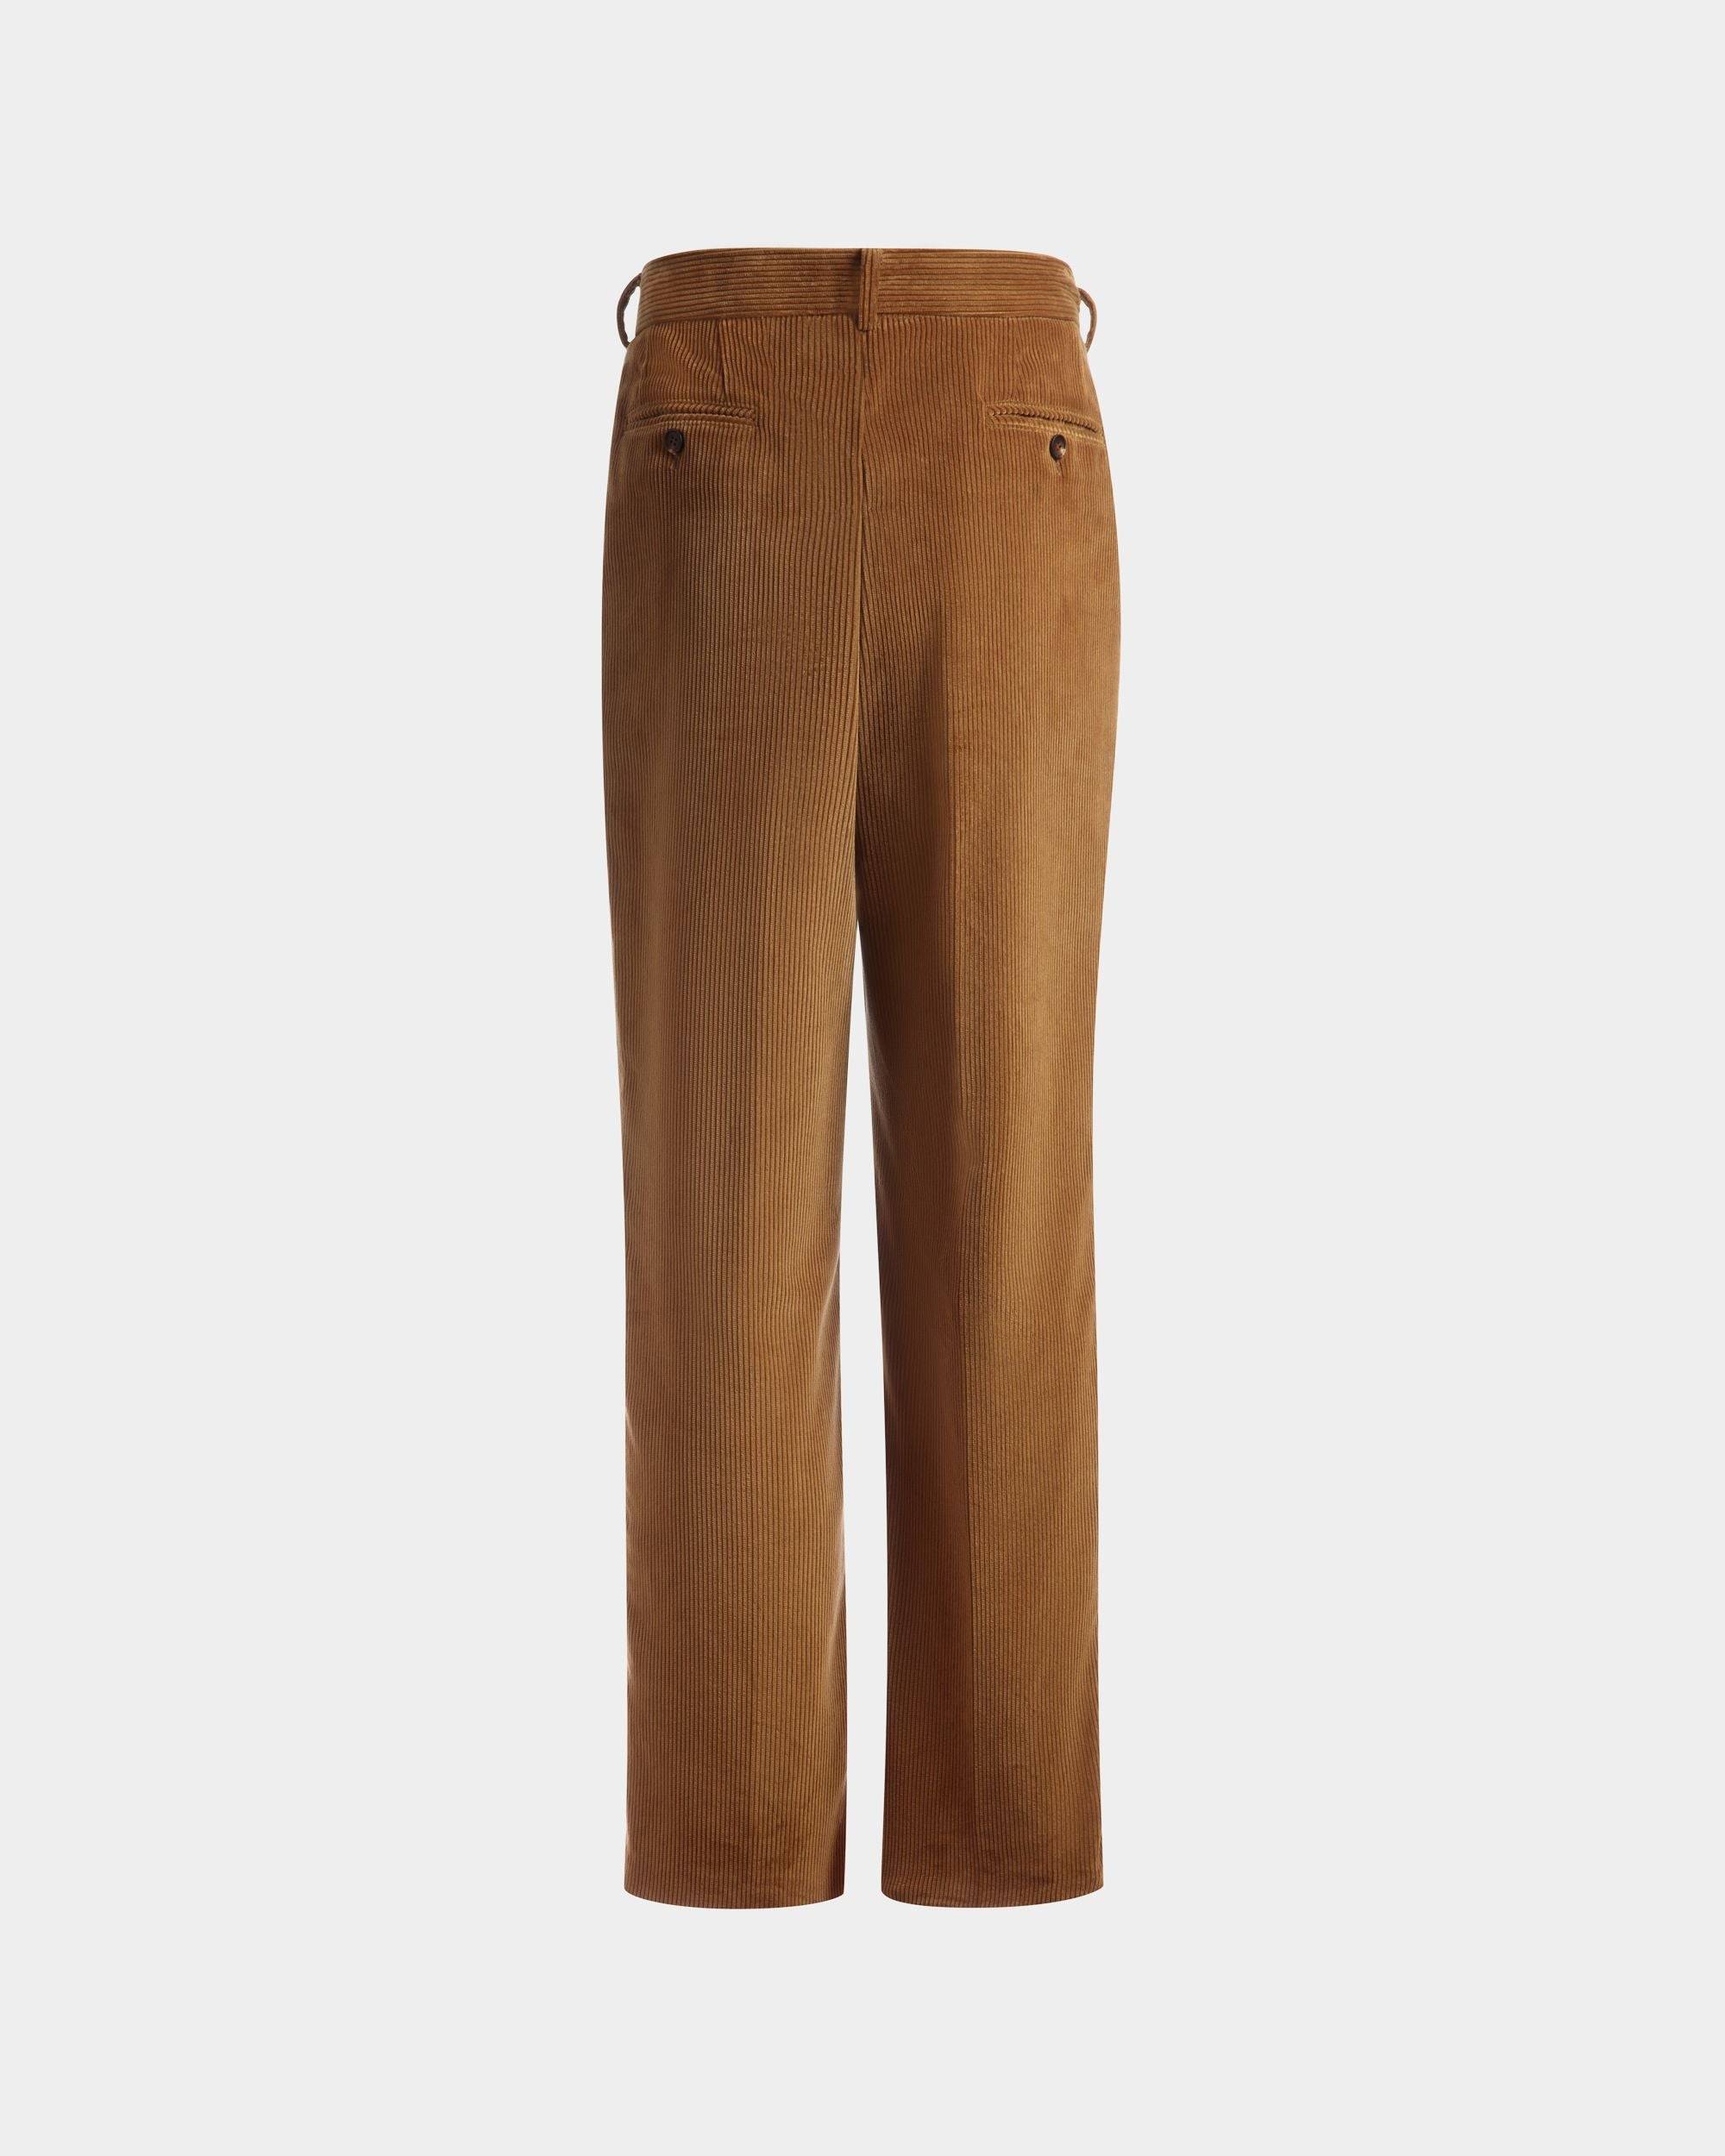 Corduroy Tailored Pants | Men's Pants | Camel Cotton | Bally | Still Life Back